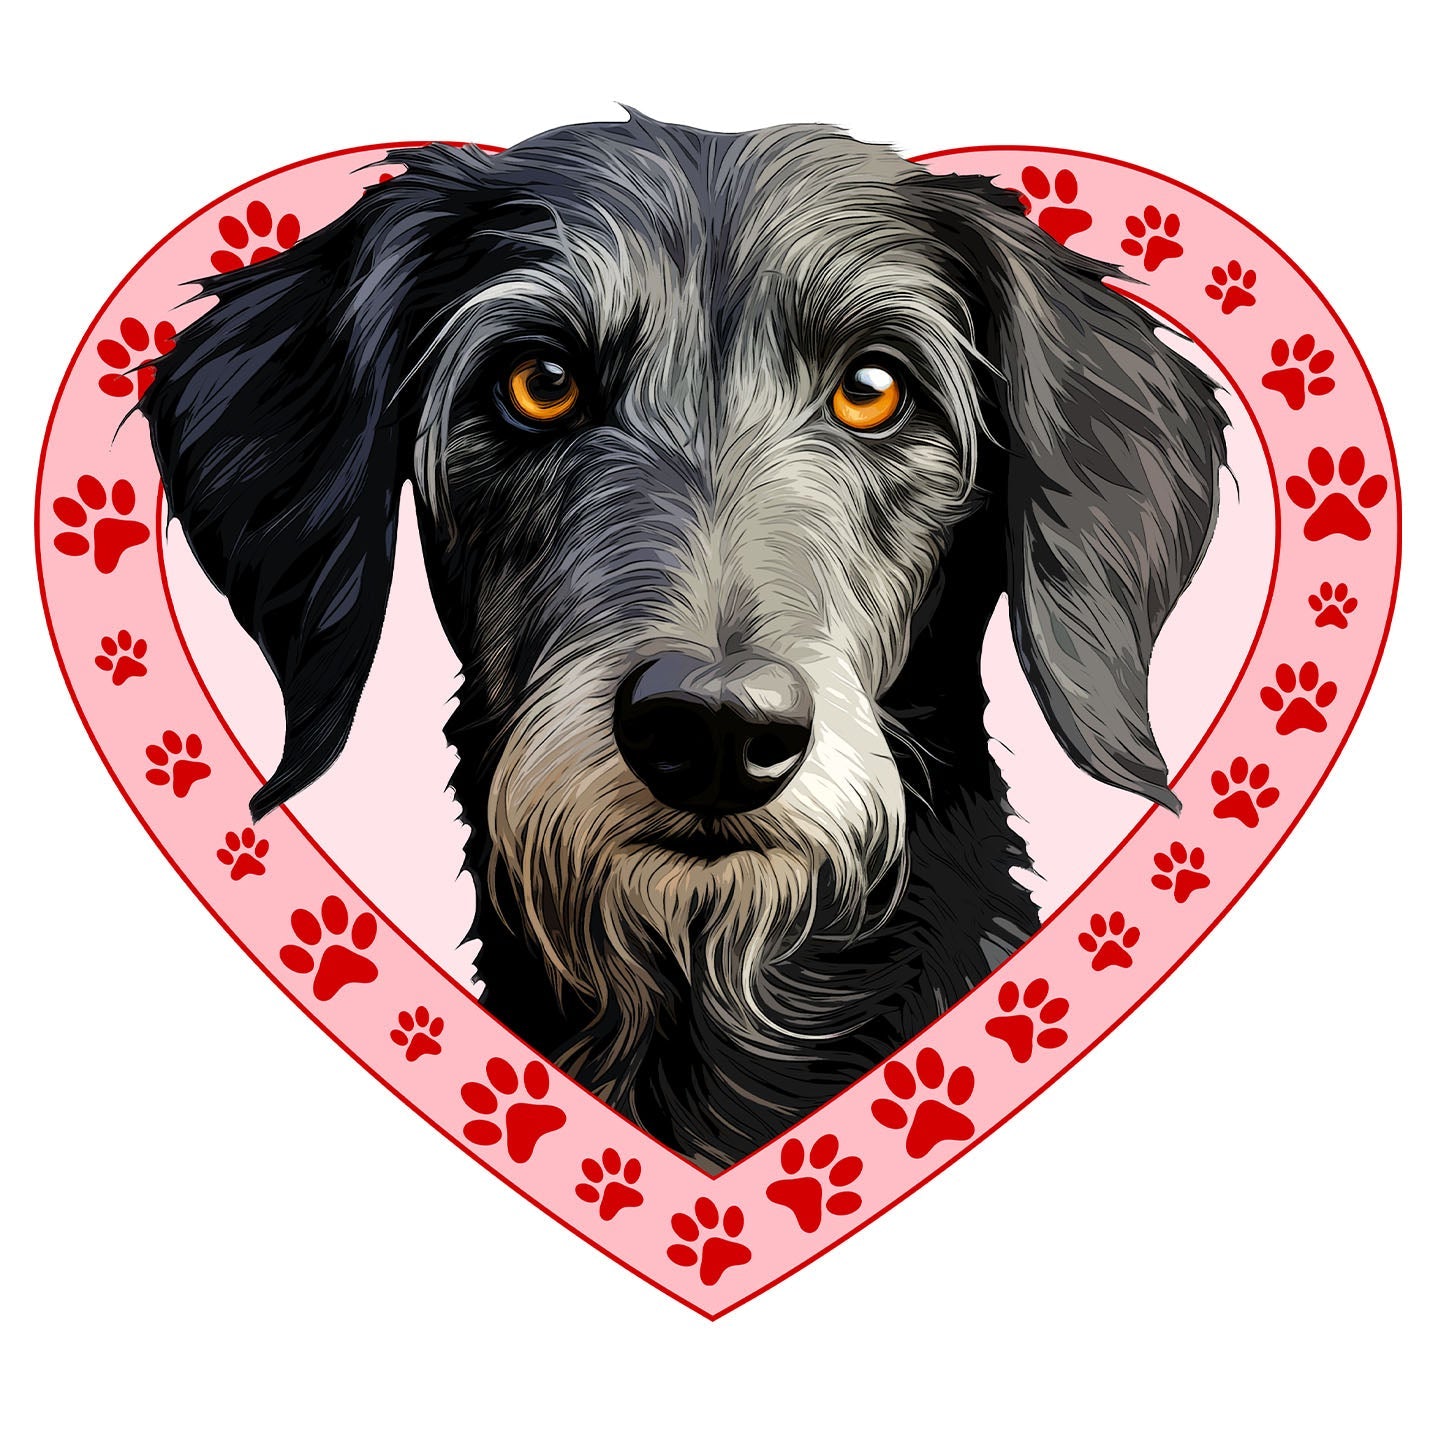 Scottish Deerhound Illustration In Heart - Adult Unisex T-Shirt